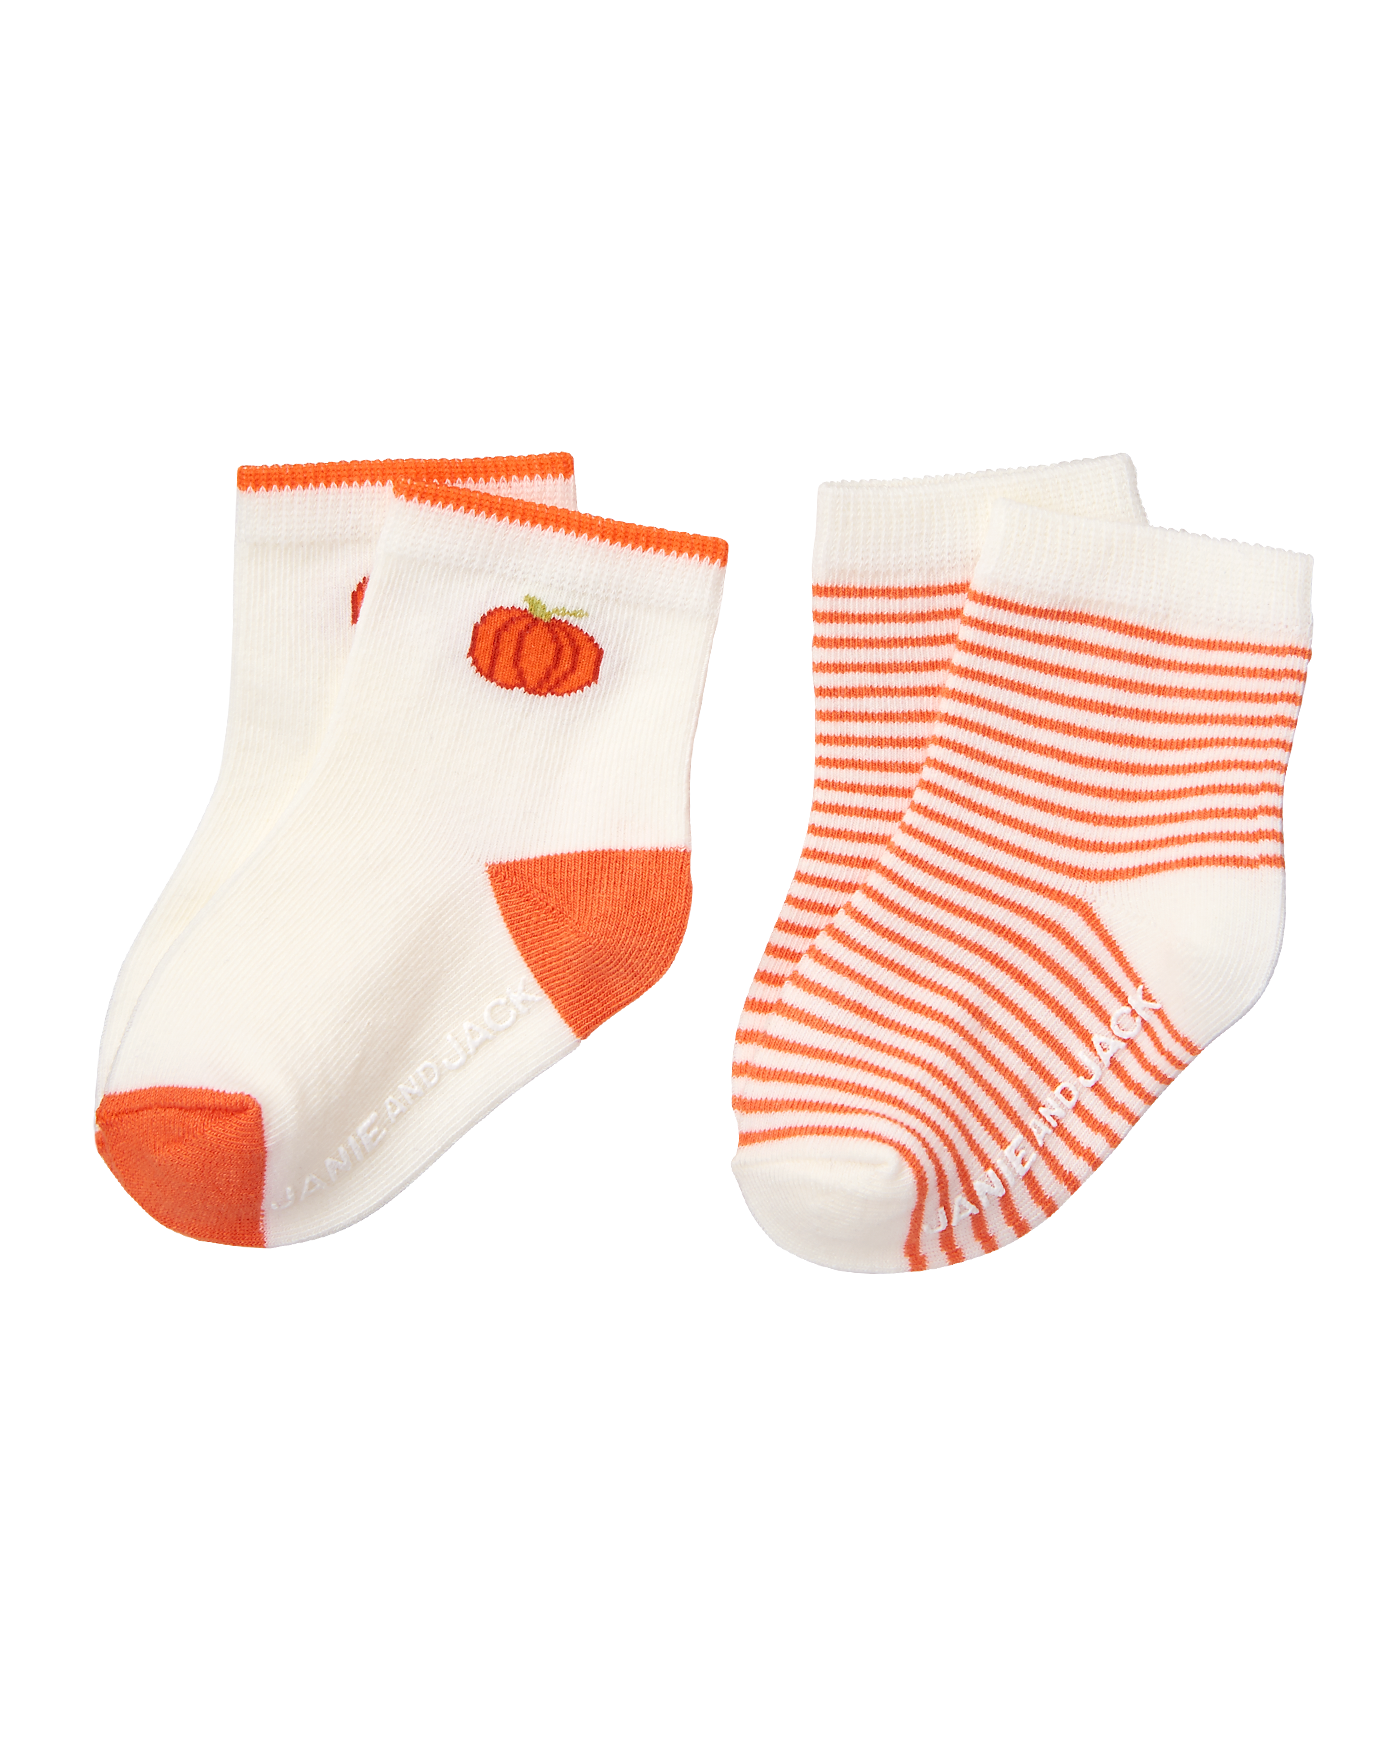 Pumpkin & Stripe Sock 2-Pack image number 0